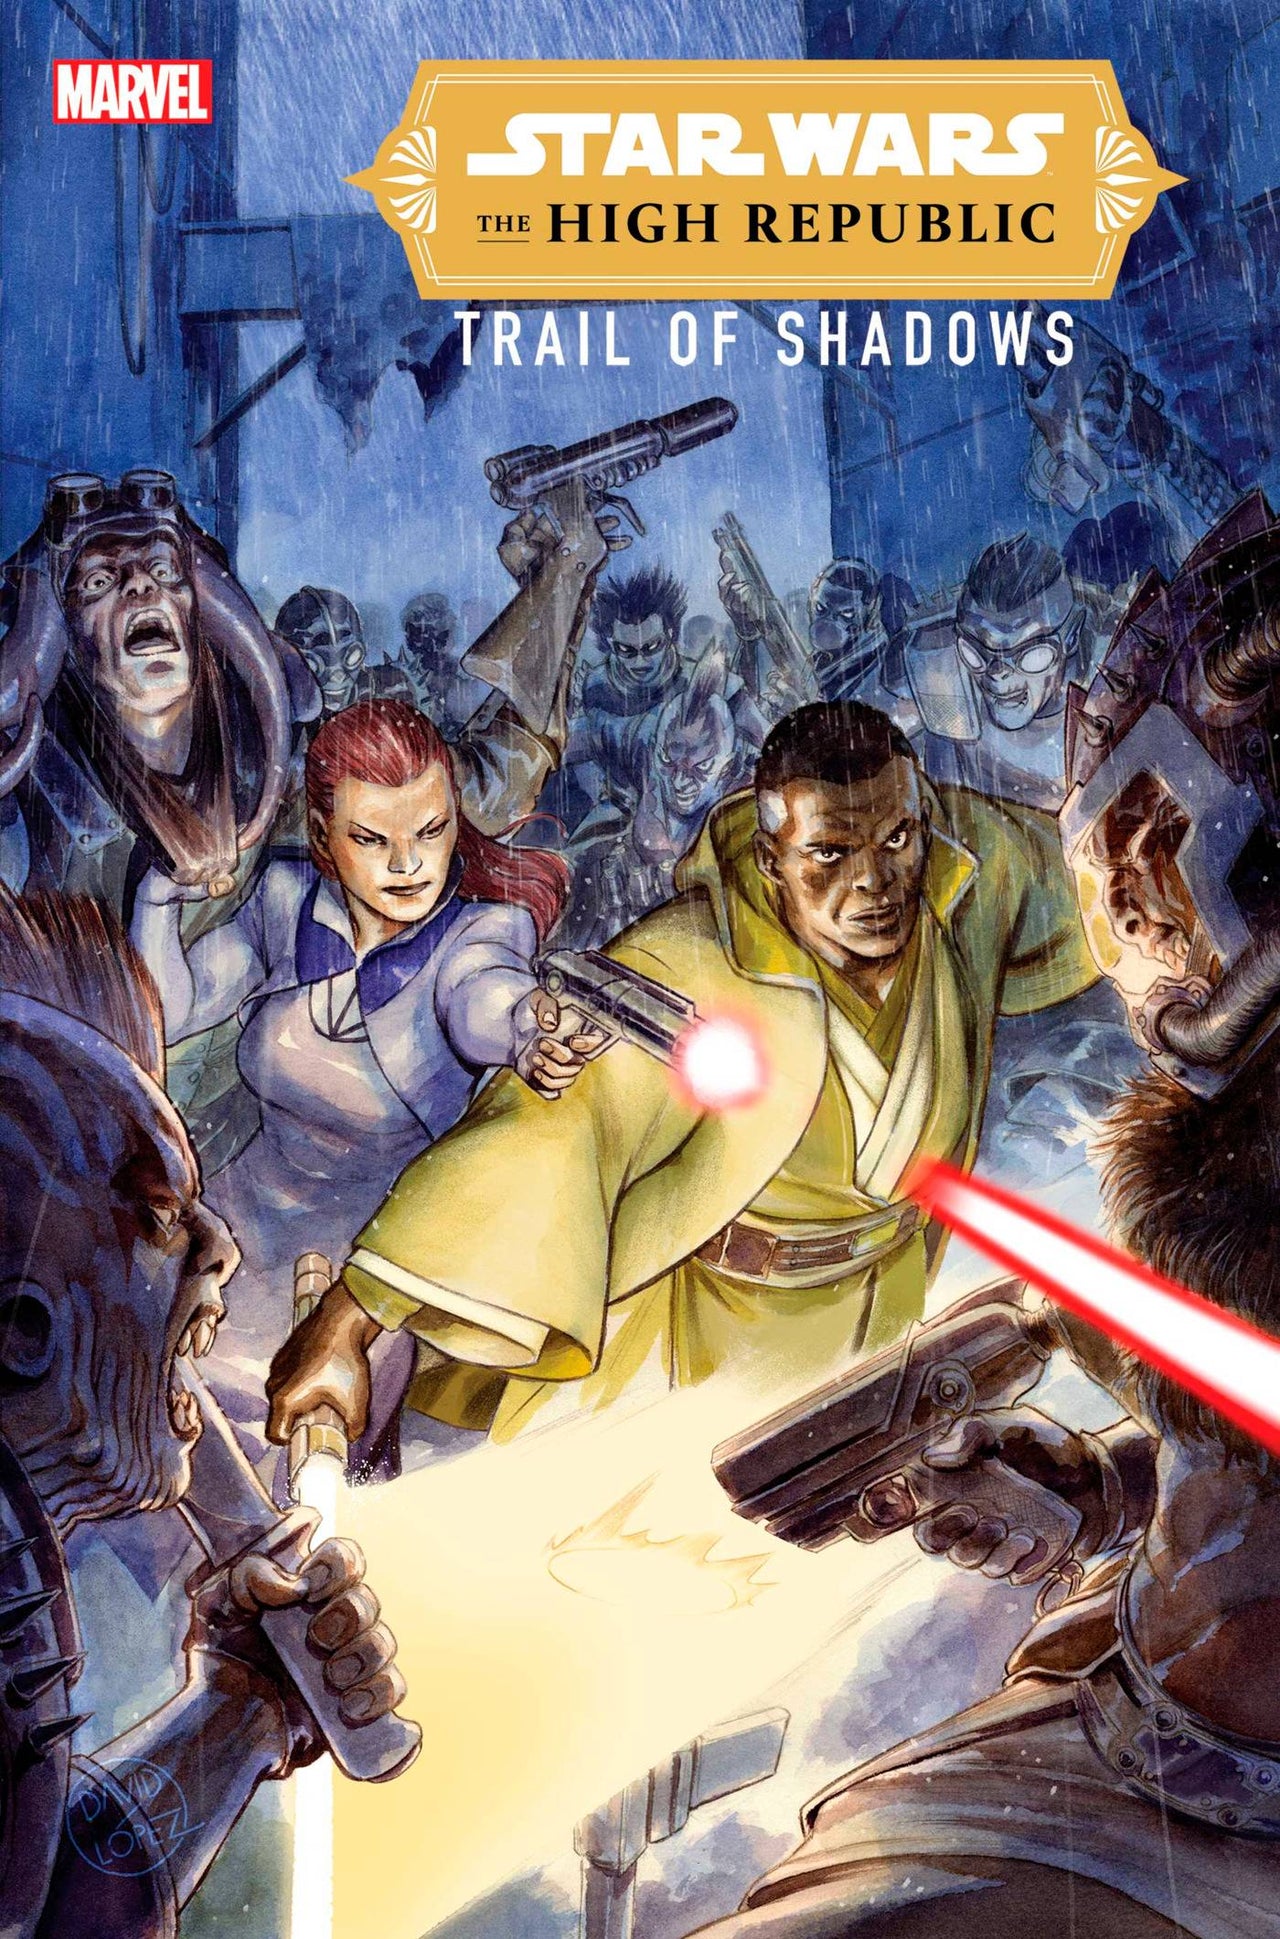 Star Wars: The High Republic - Trail Of Shadows Vol. 1 #2